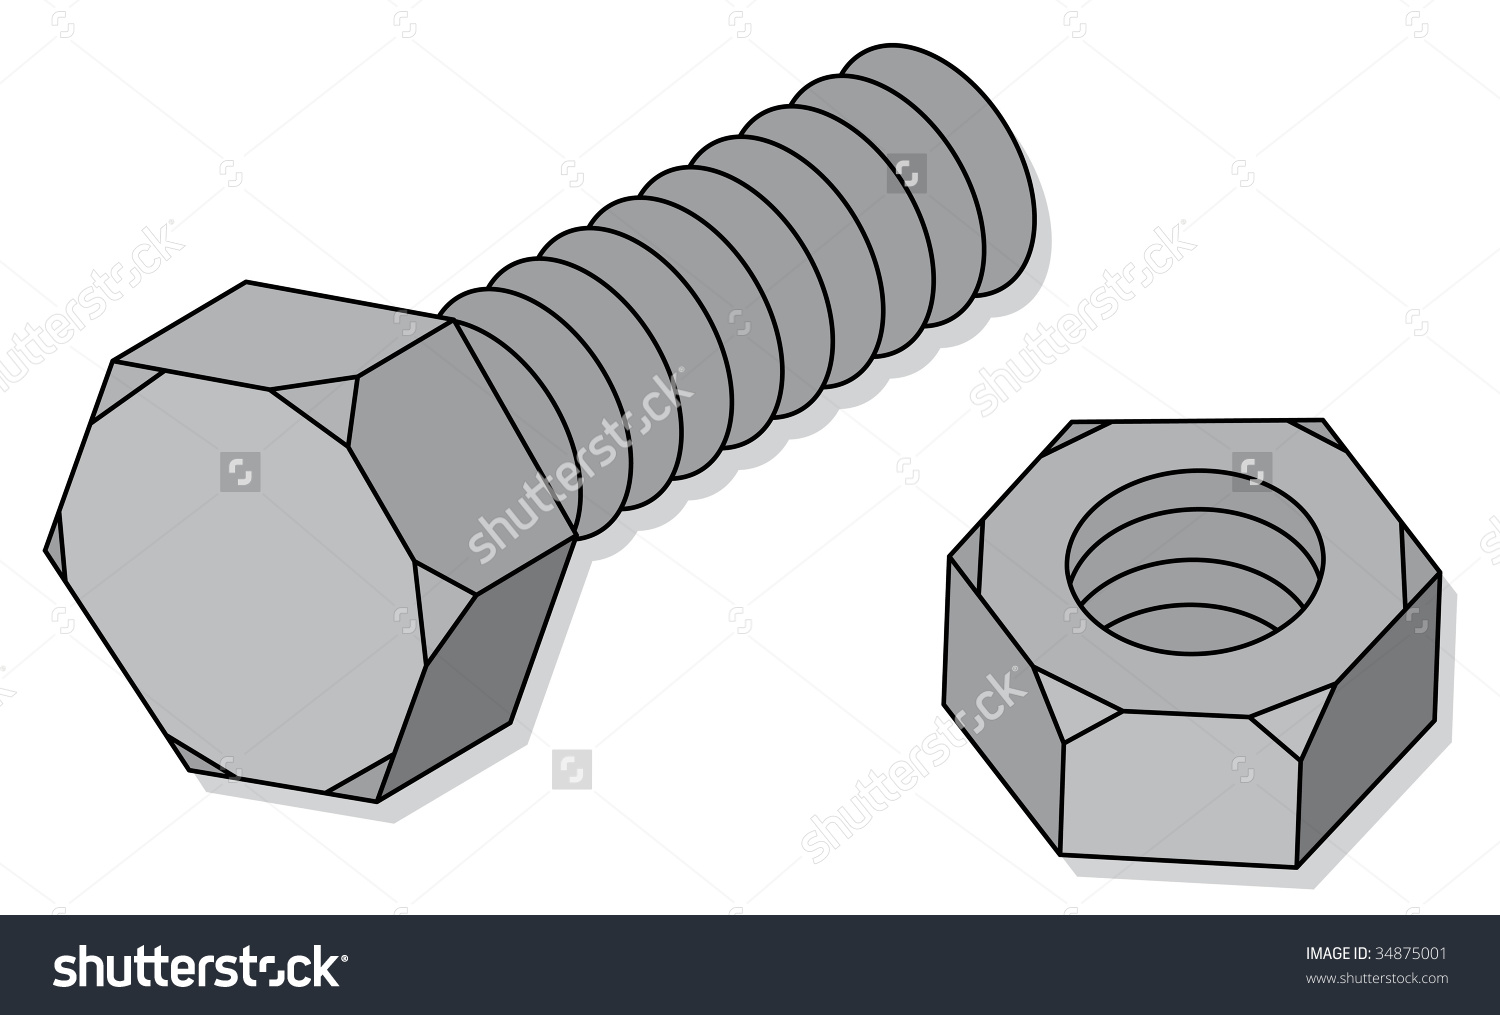 Clipart Style Cartoon Of A Nut And Bolt